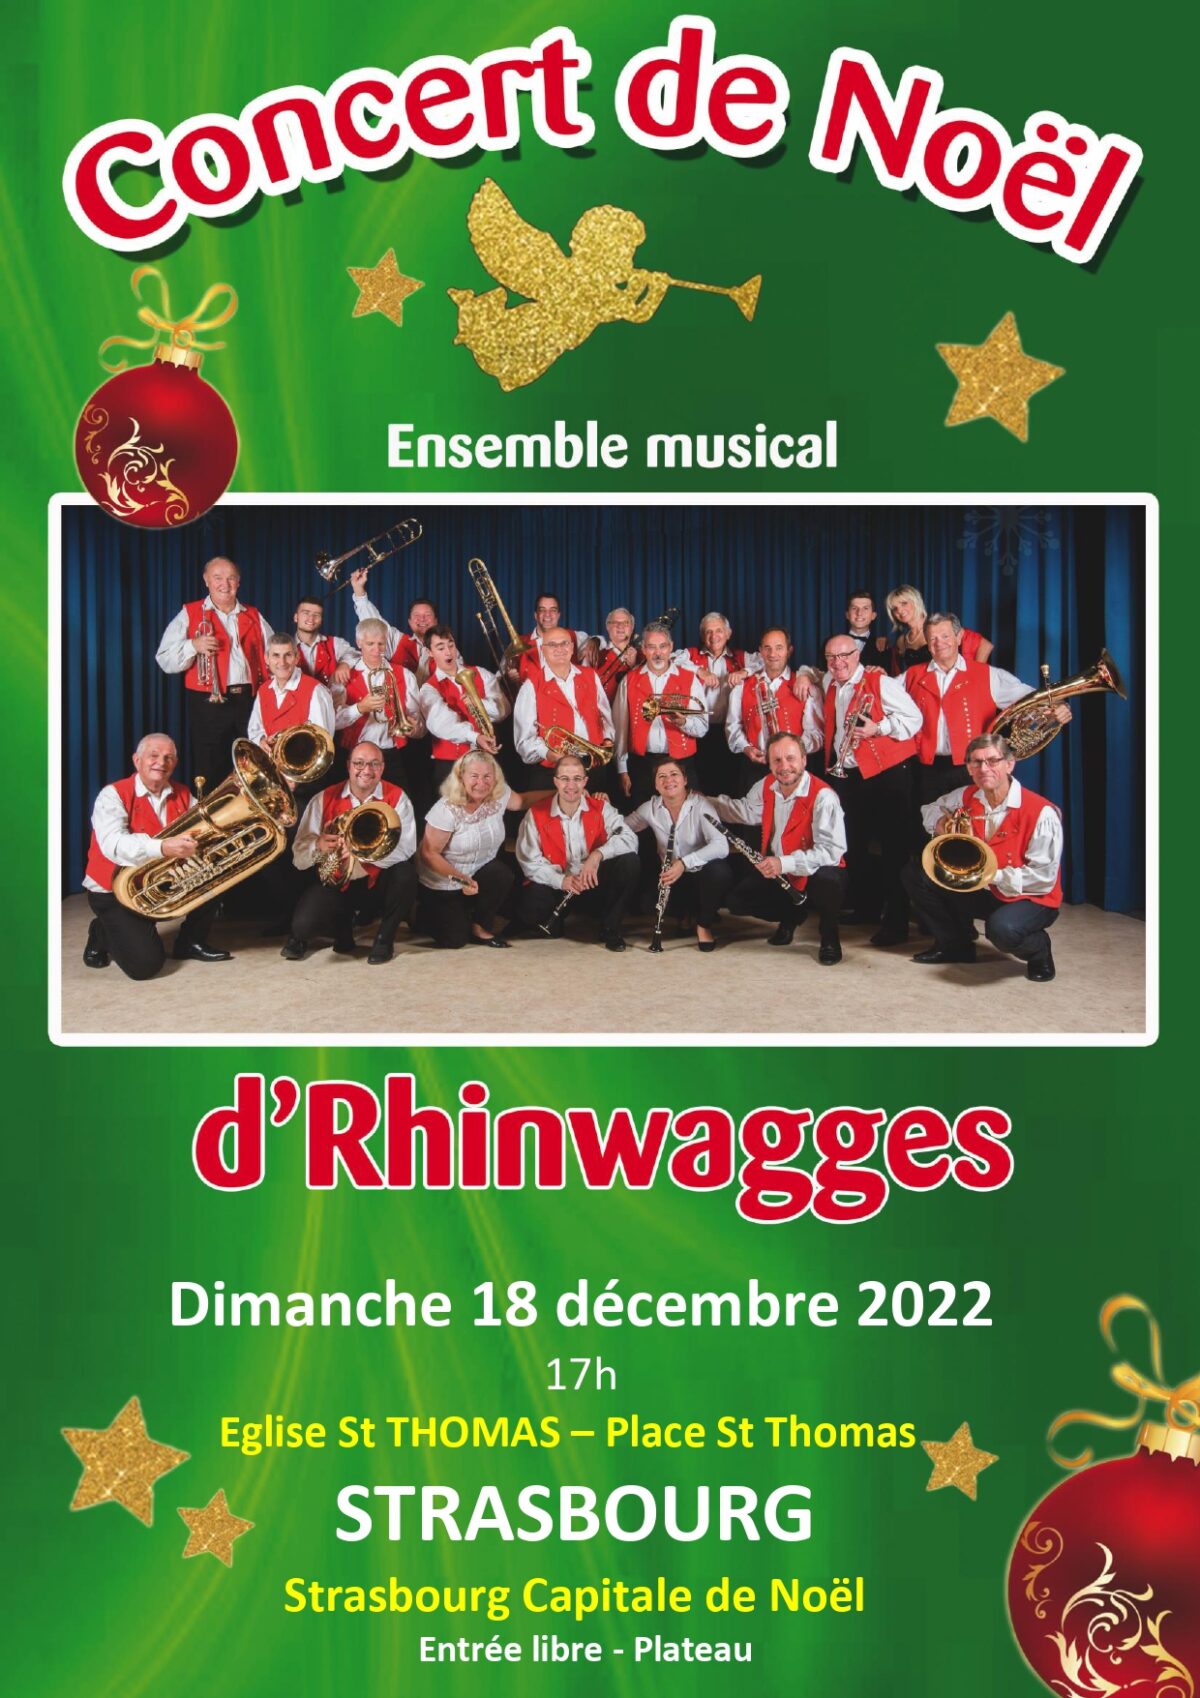 Concert de Noël Strasbourg Saint Thomas d'Rhinwagges